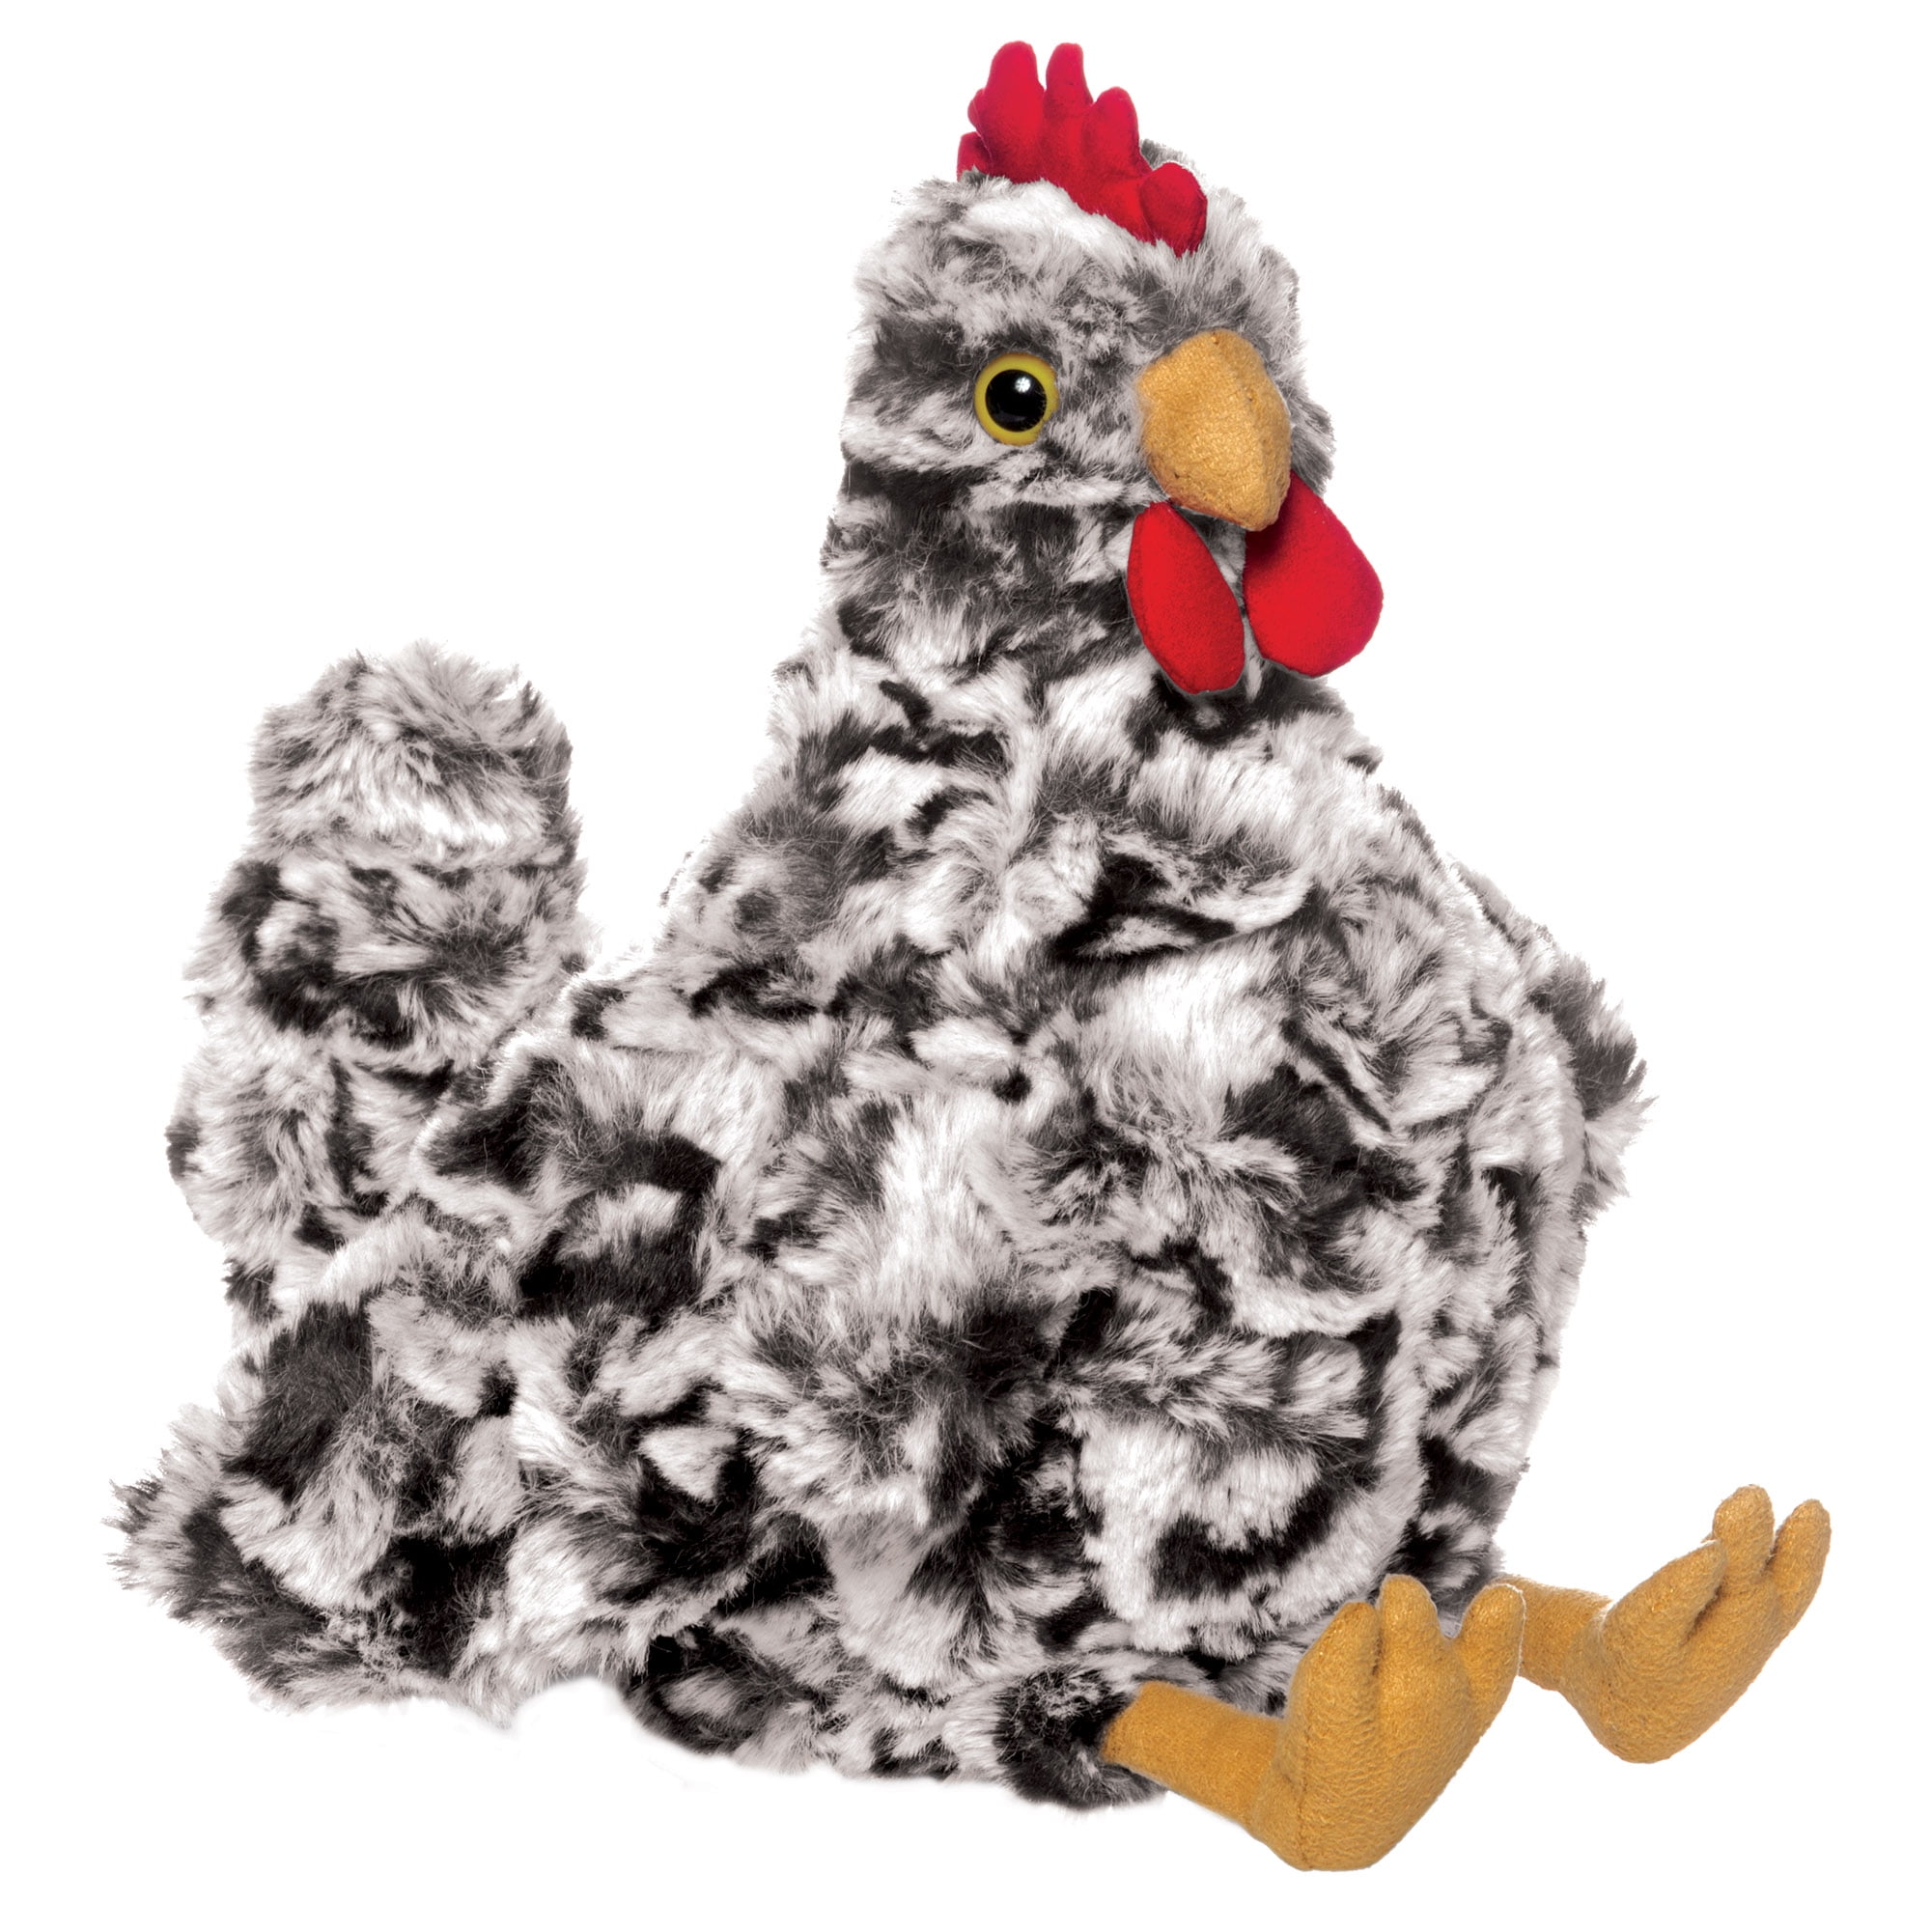 hen stuffed animal